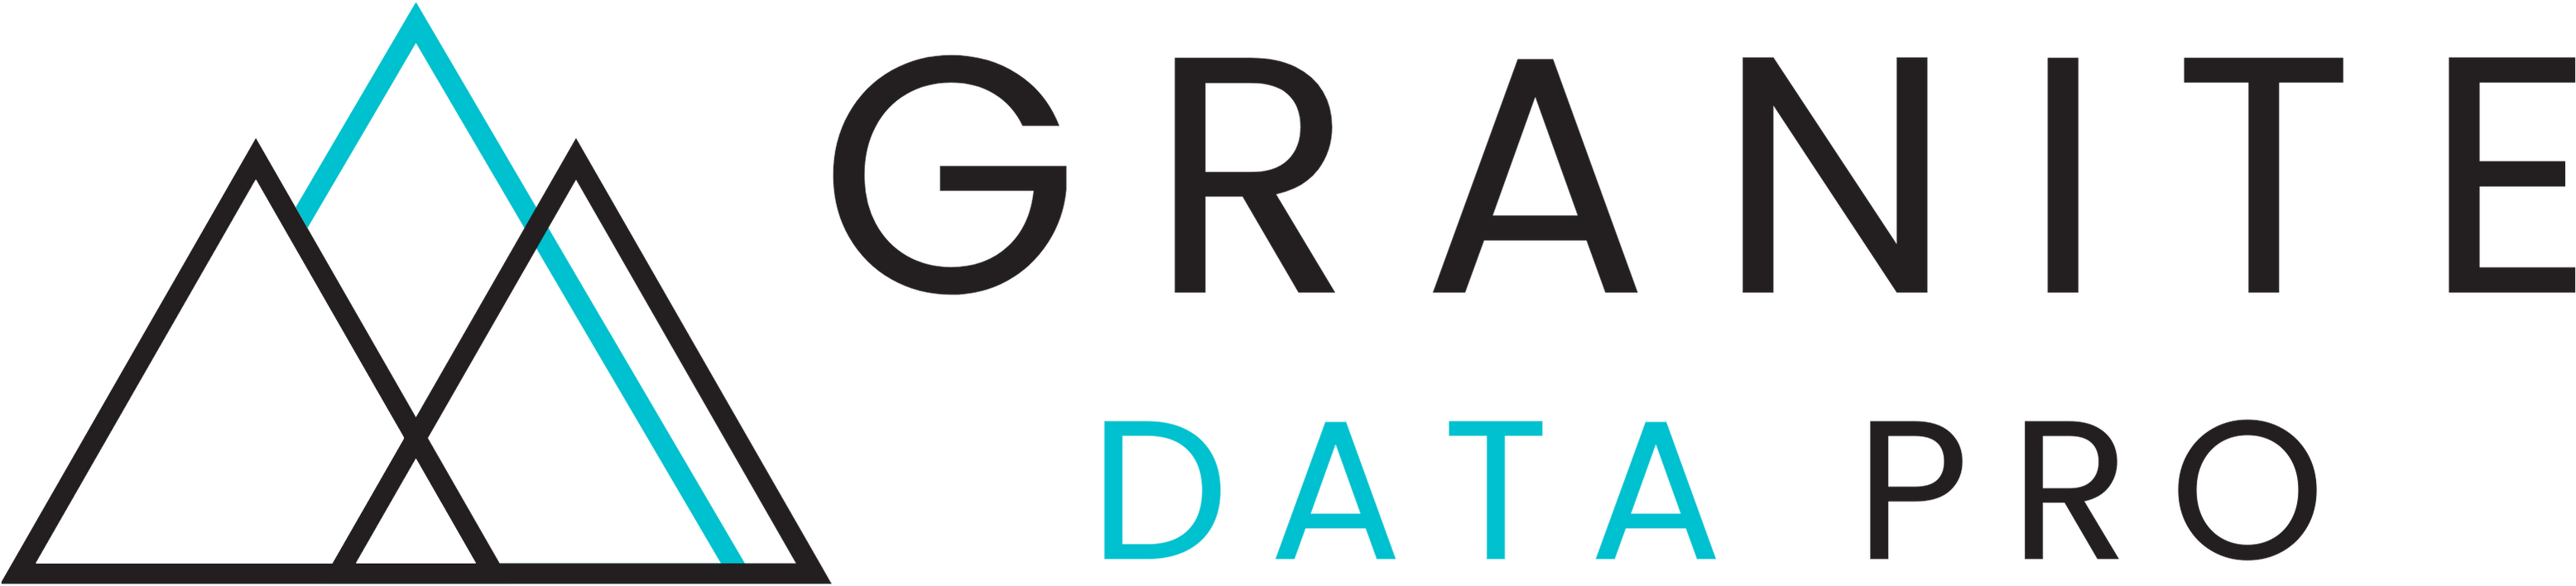 Granite Data Pro